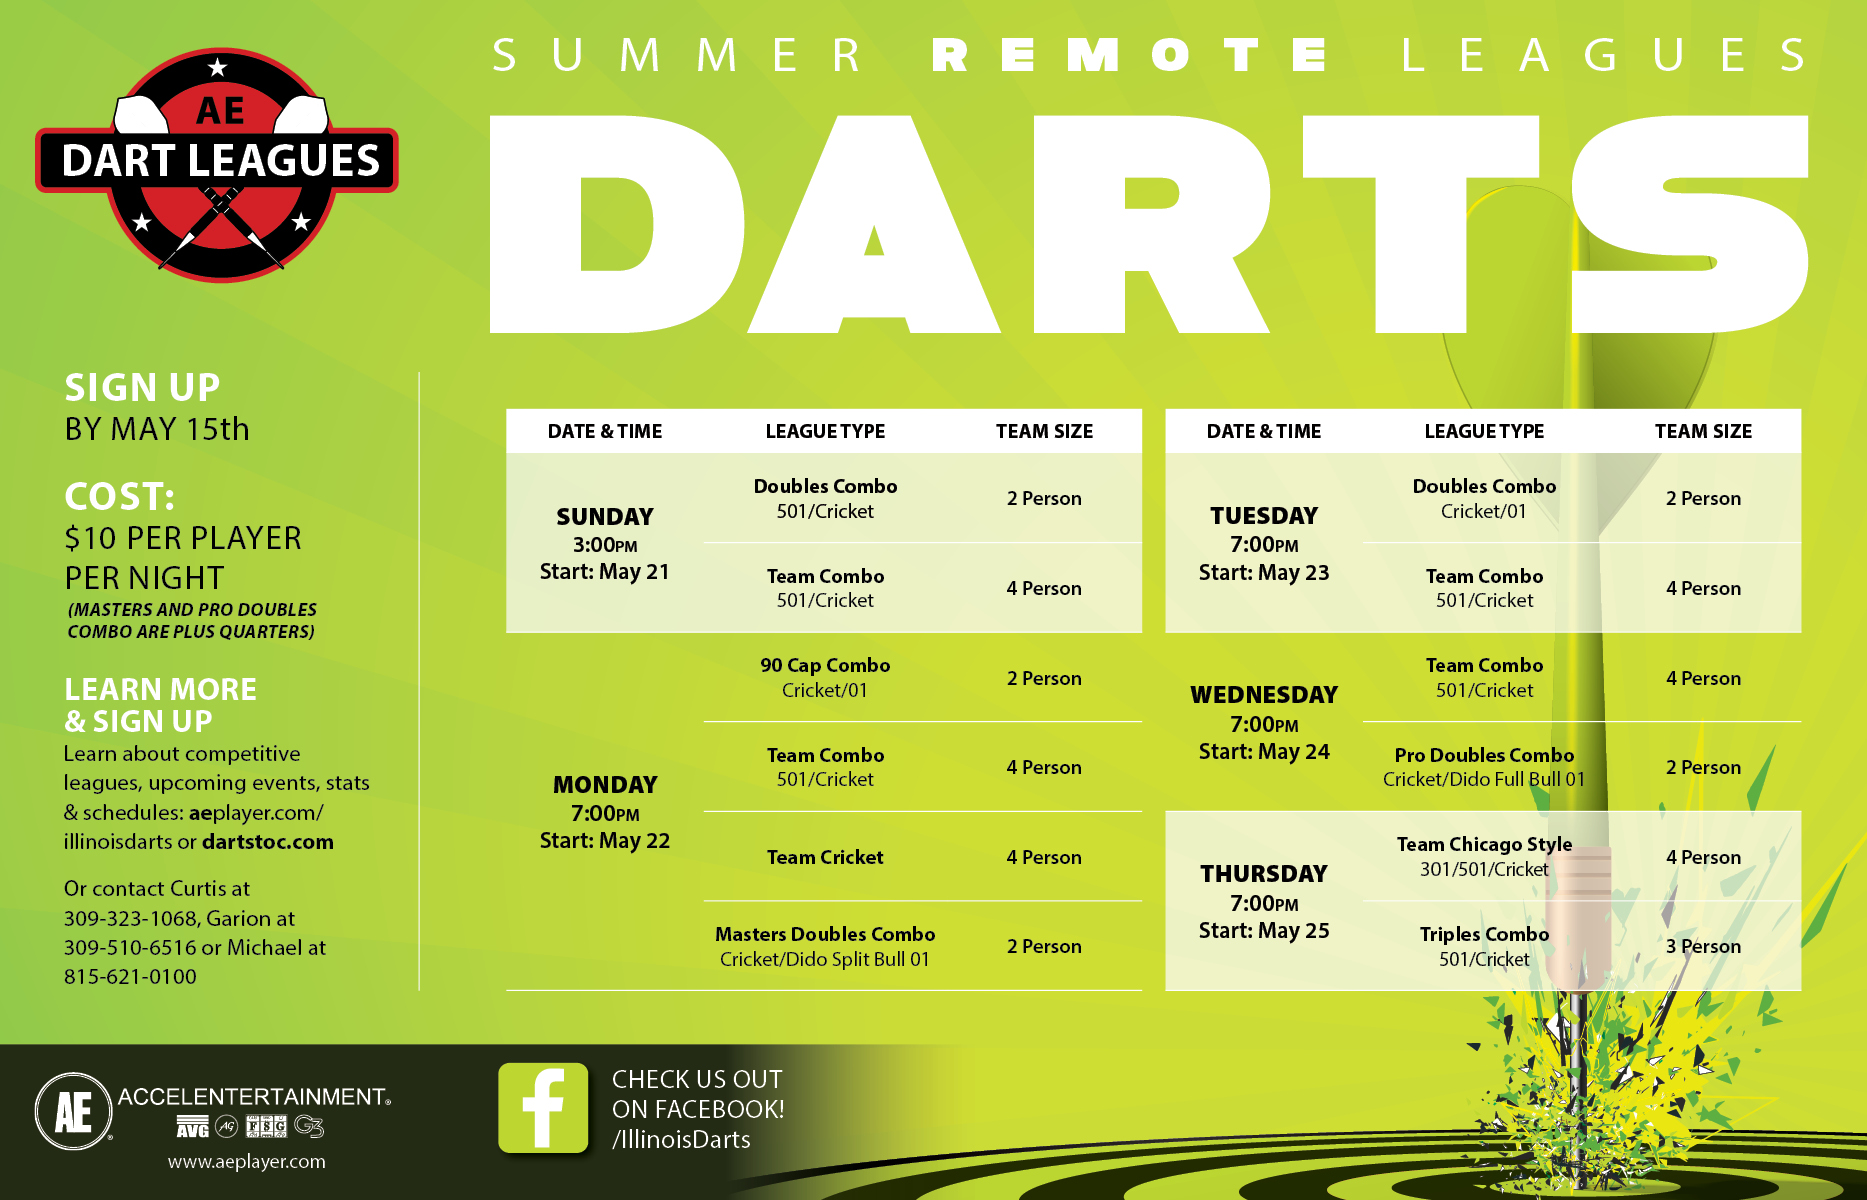 Darts_Remote League_Summer 23_1440x900